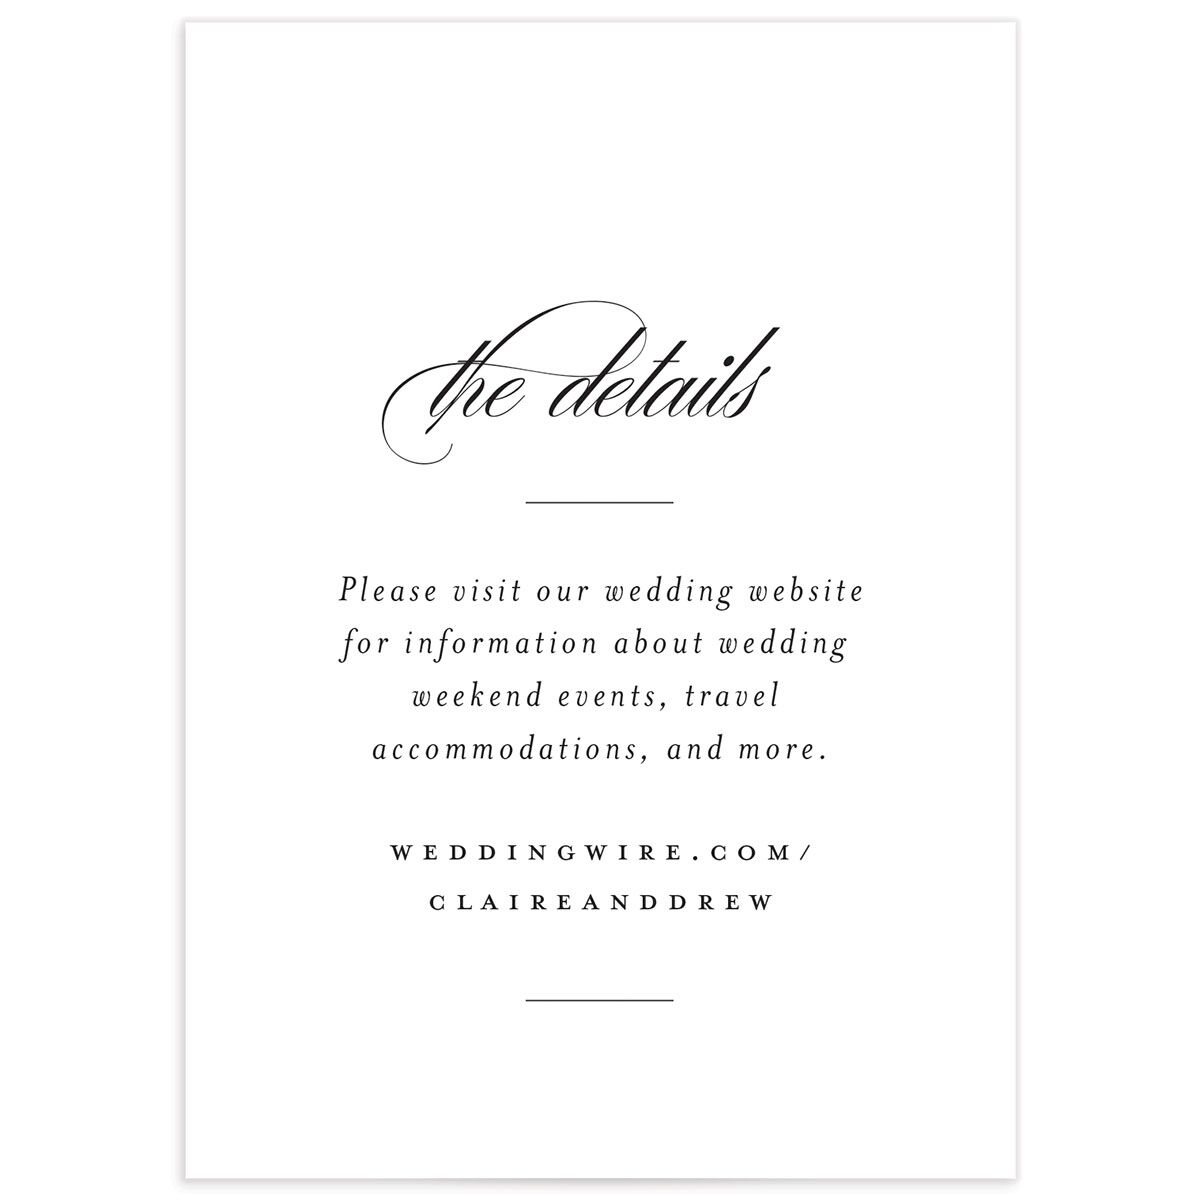 Elegant Cursive Wedding Enclosure Cards front in Midnight